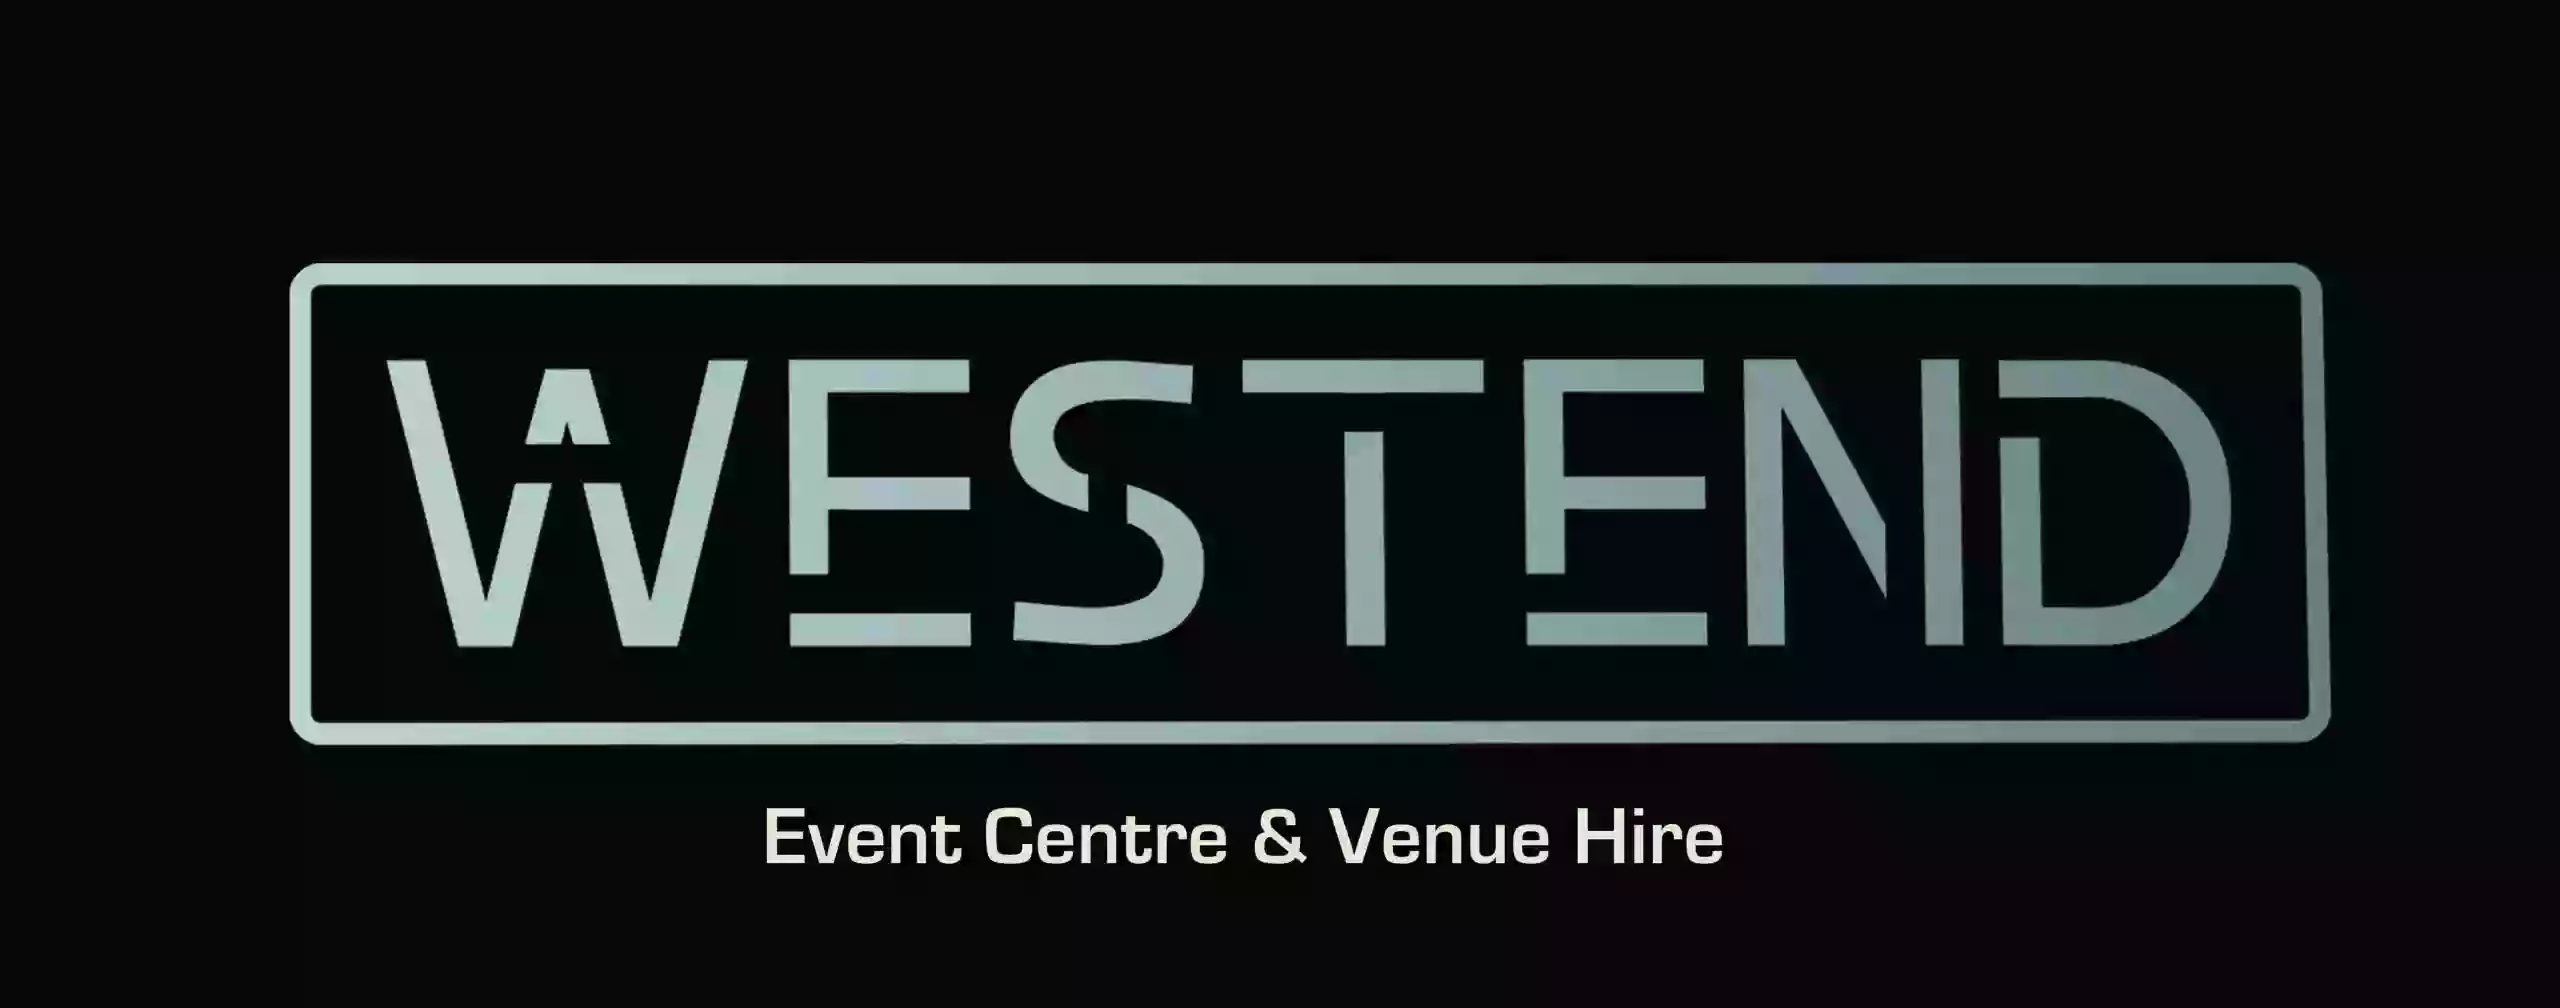 Westend Event Centre & Venue Hire